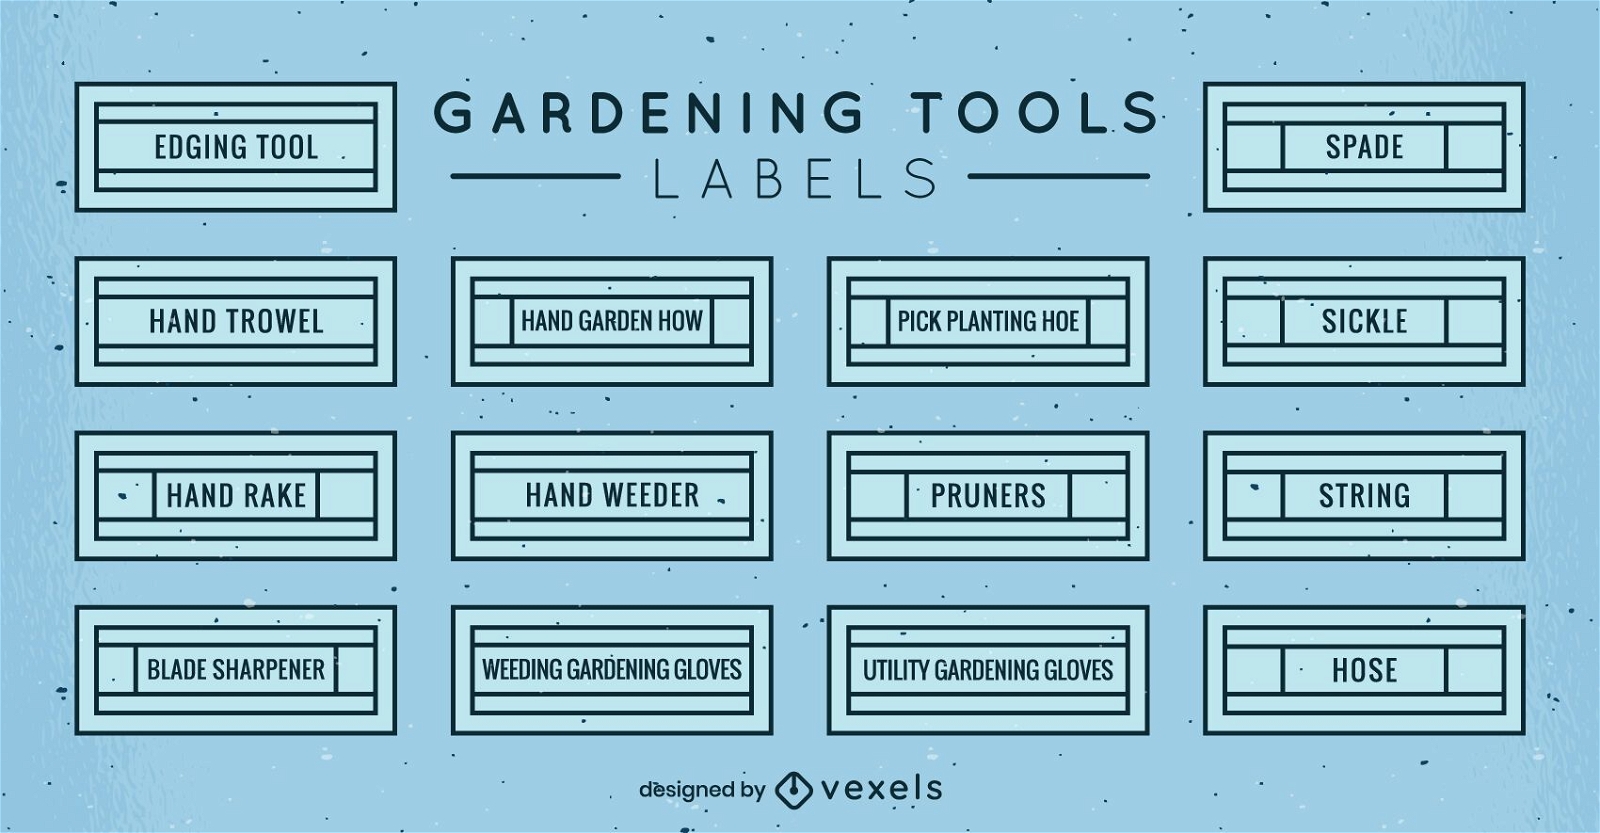 Gardening tools labels set